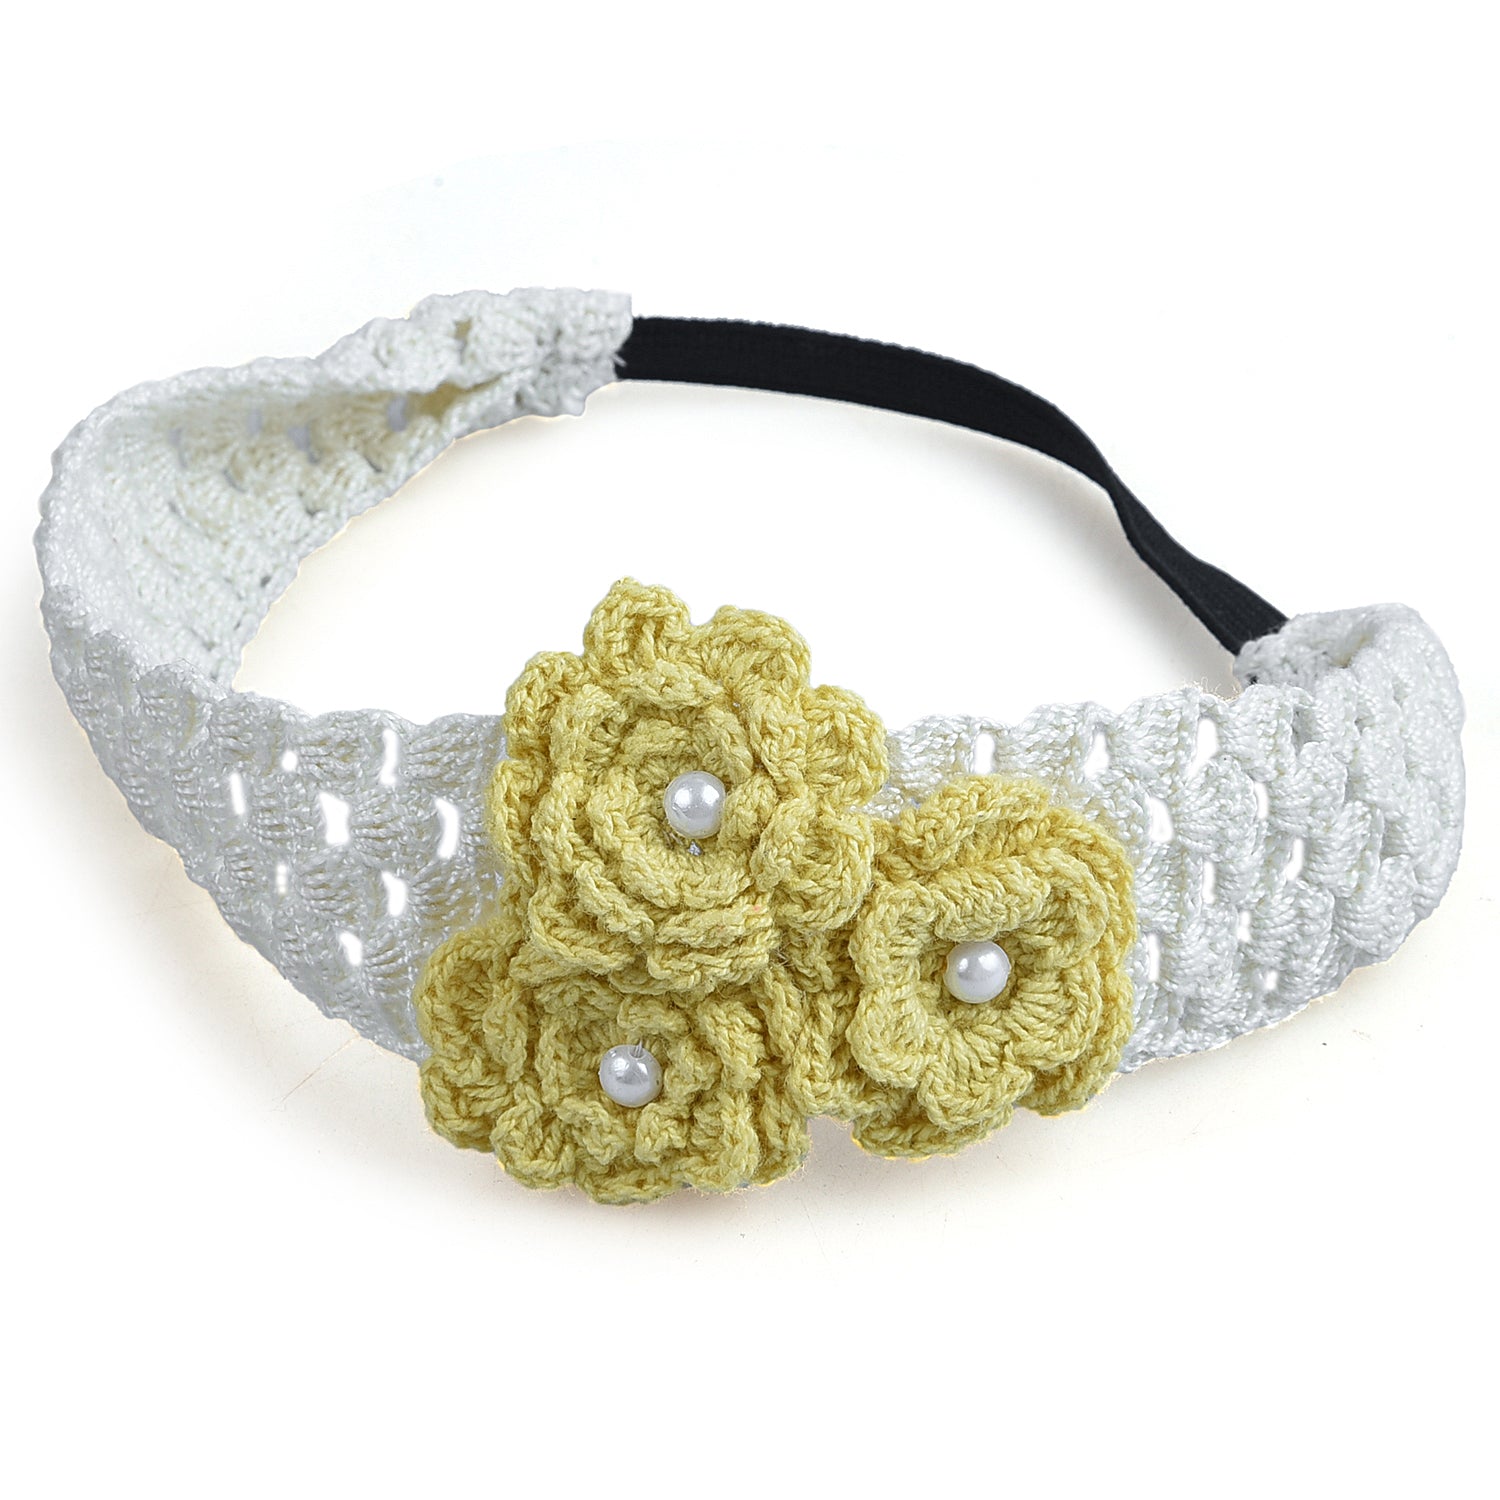 Handmade Crochet Headband With Crochet Flowers - Yellow